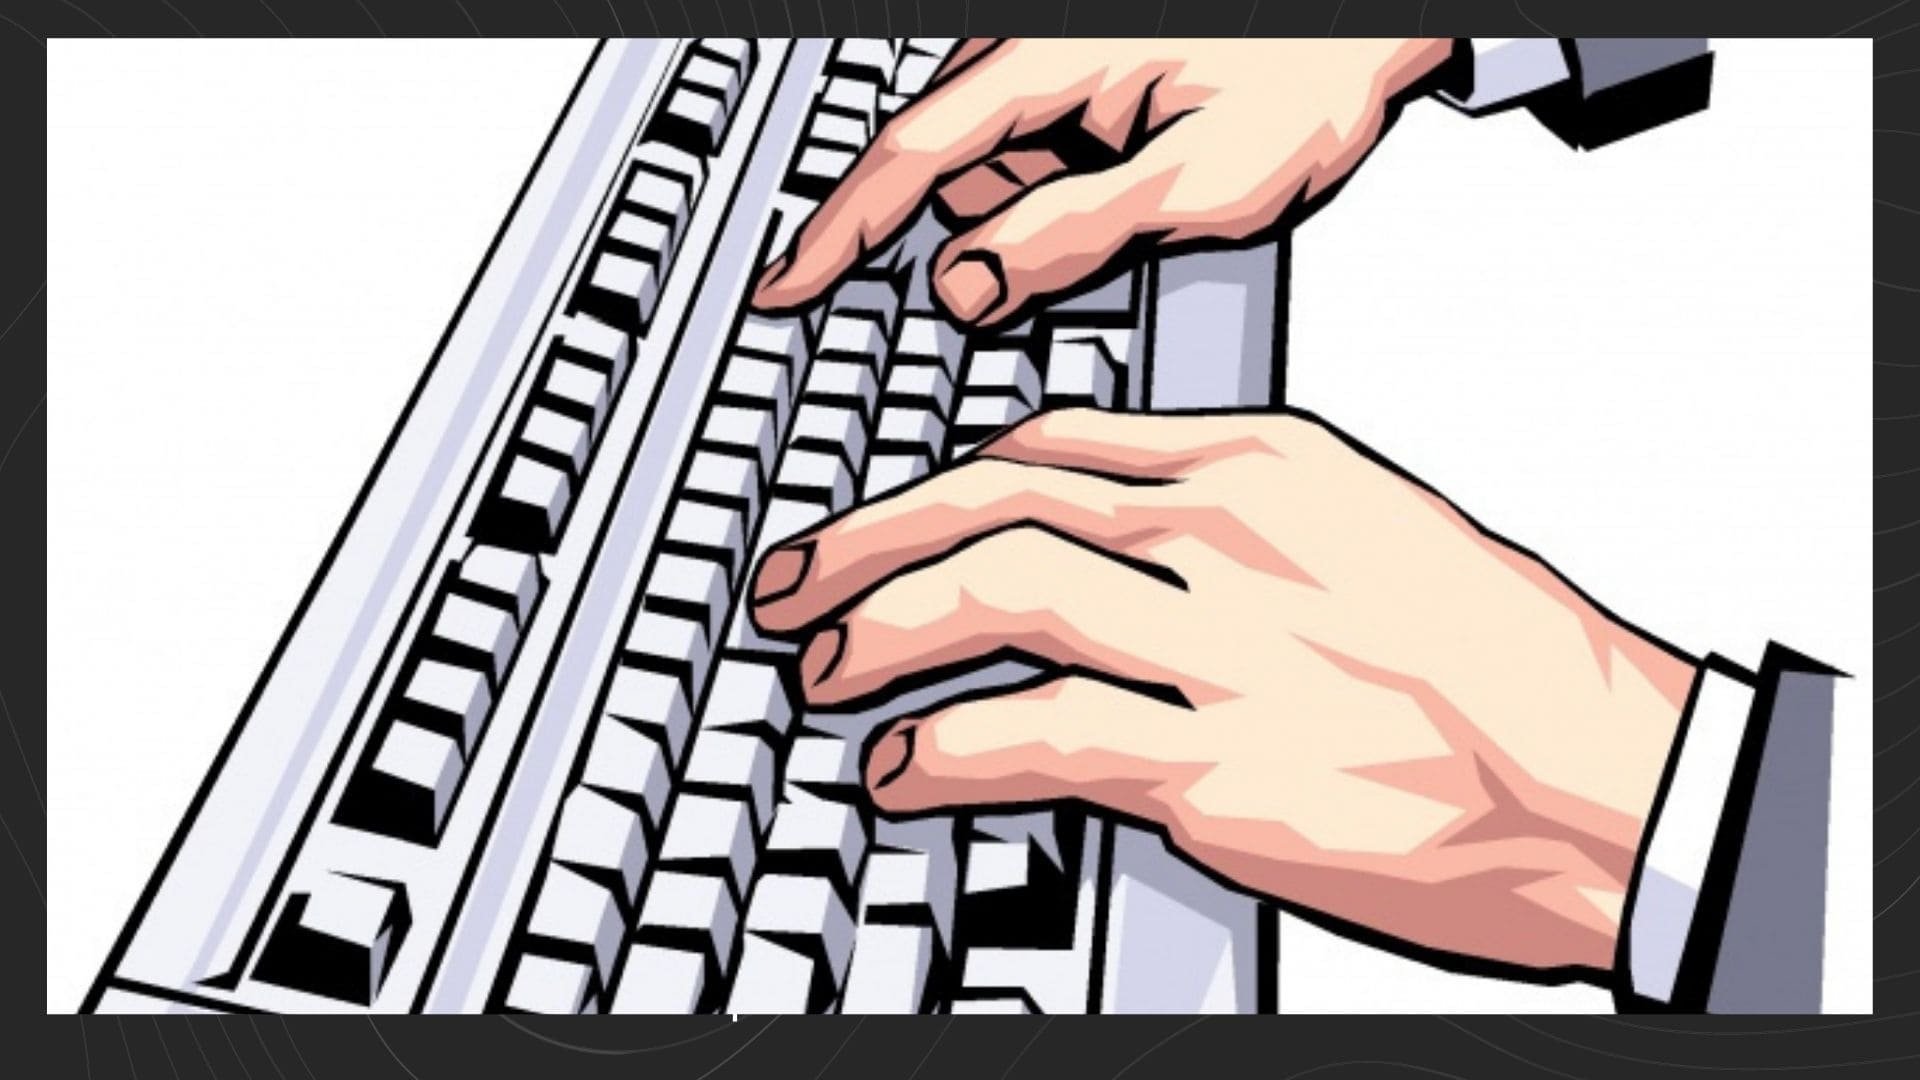 Page for typing. Руки на клавиатуре. Печатающий человек. Печатает на компьютере. Набор текста.